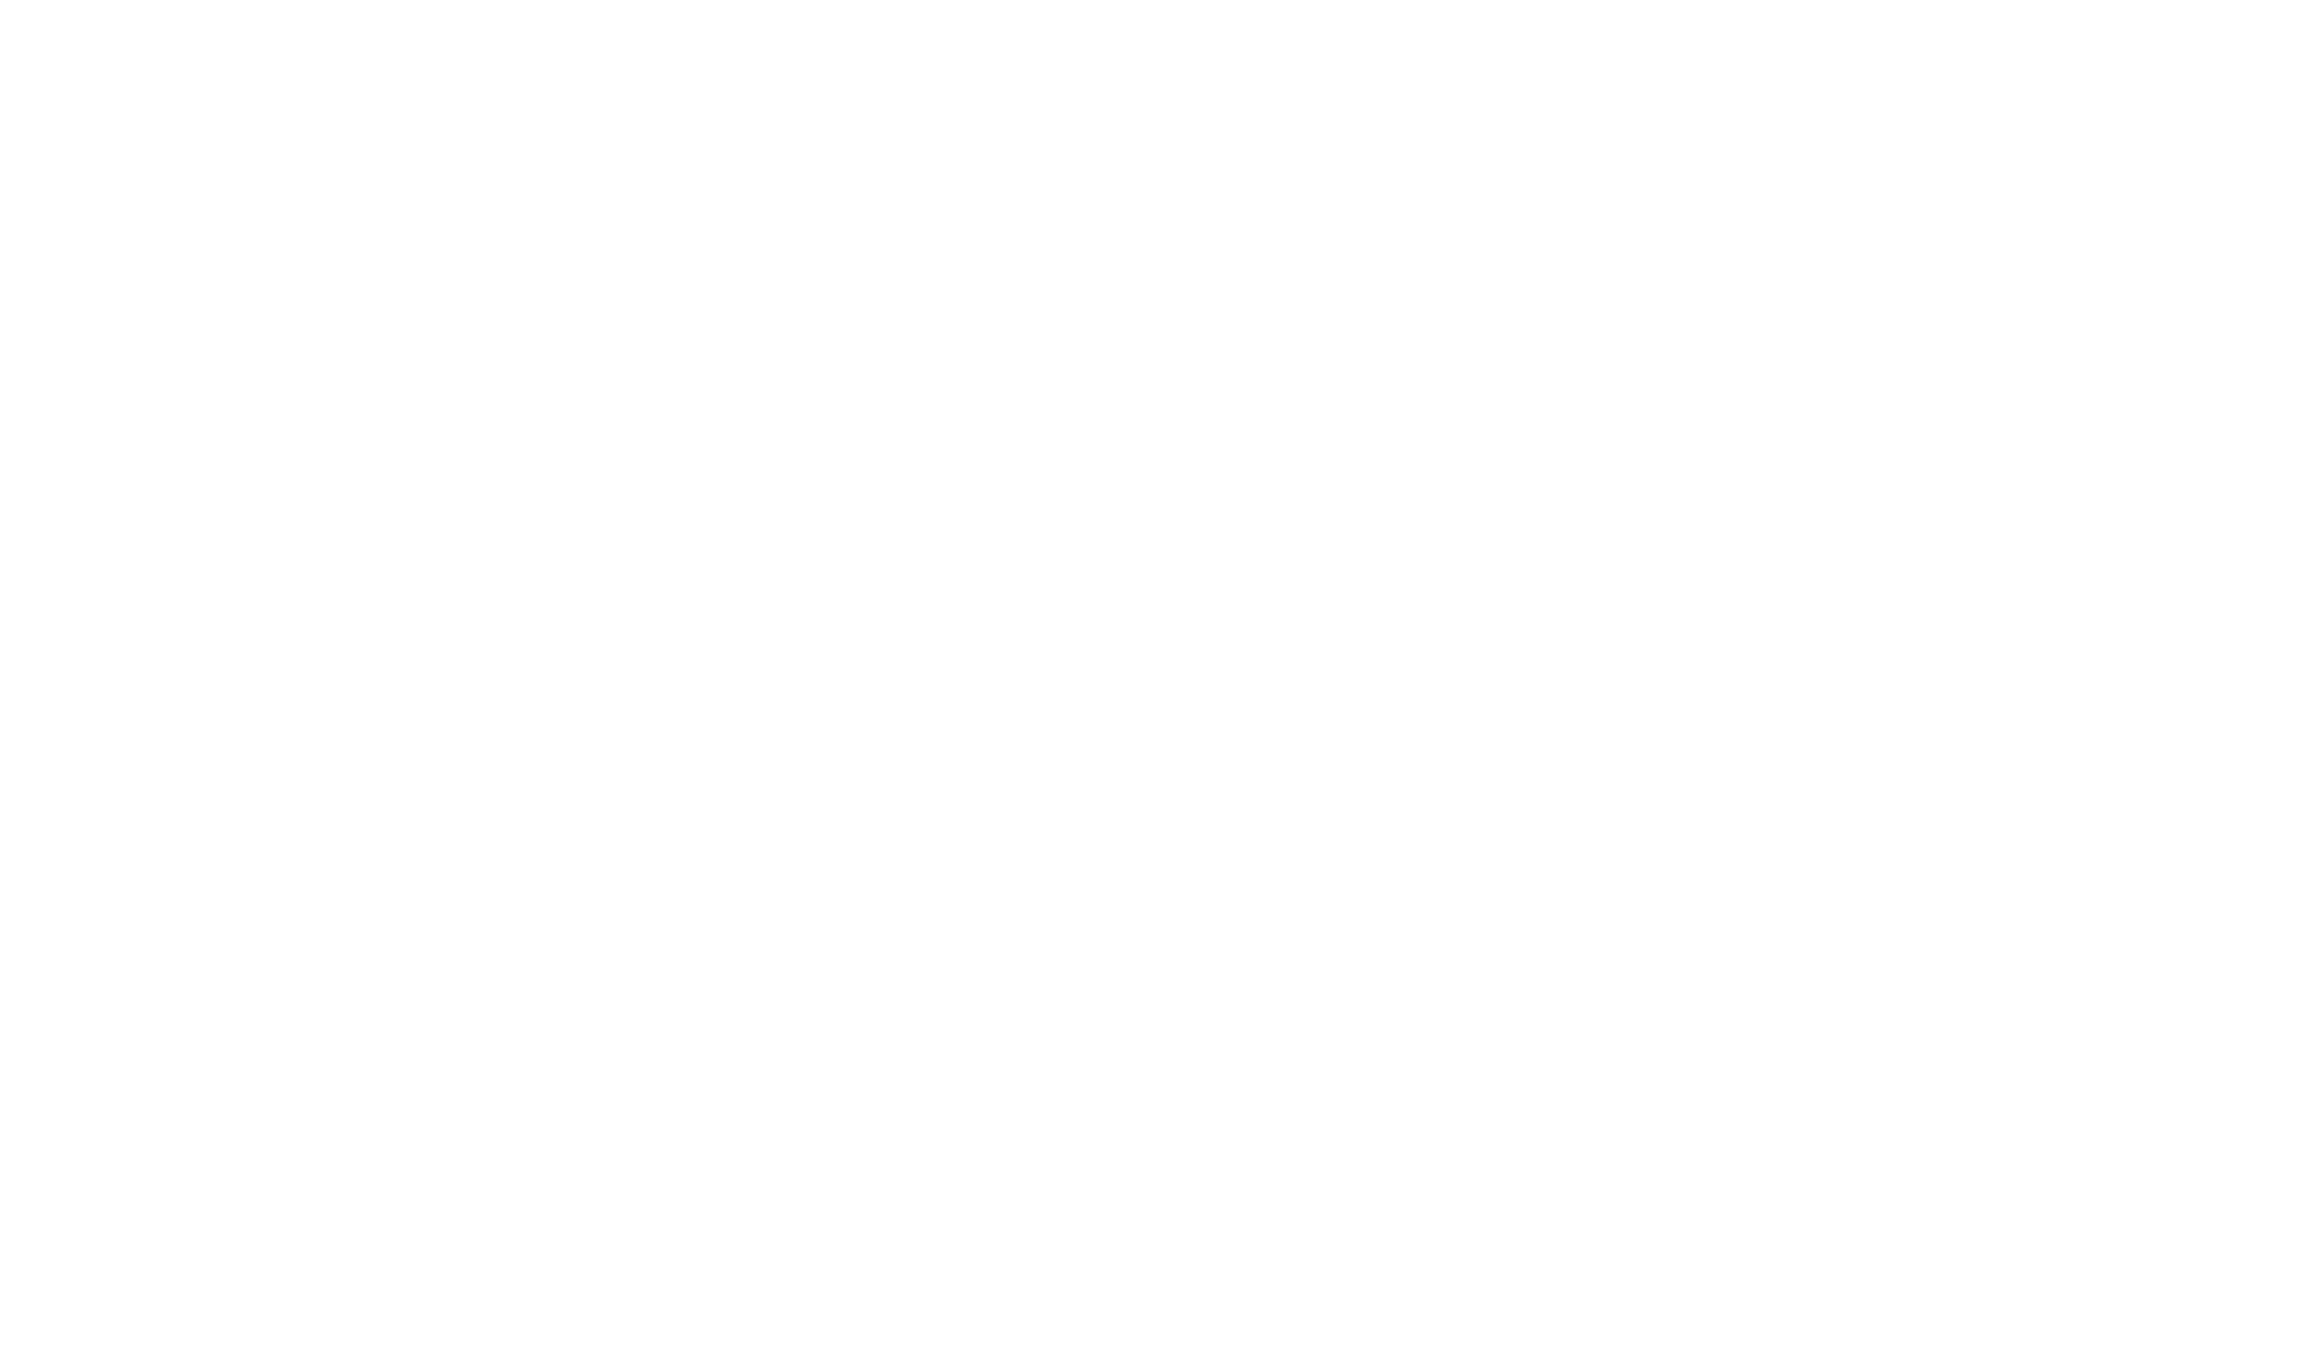 THE SAVAGE HUMANS